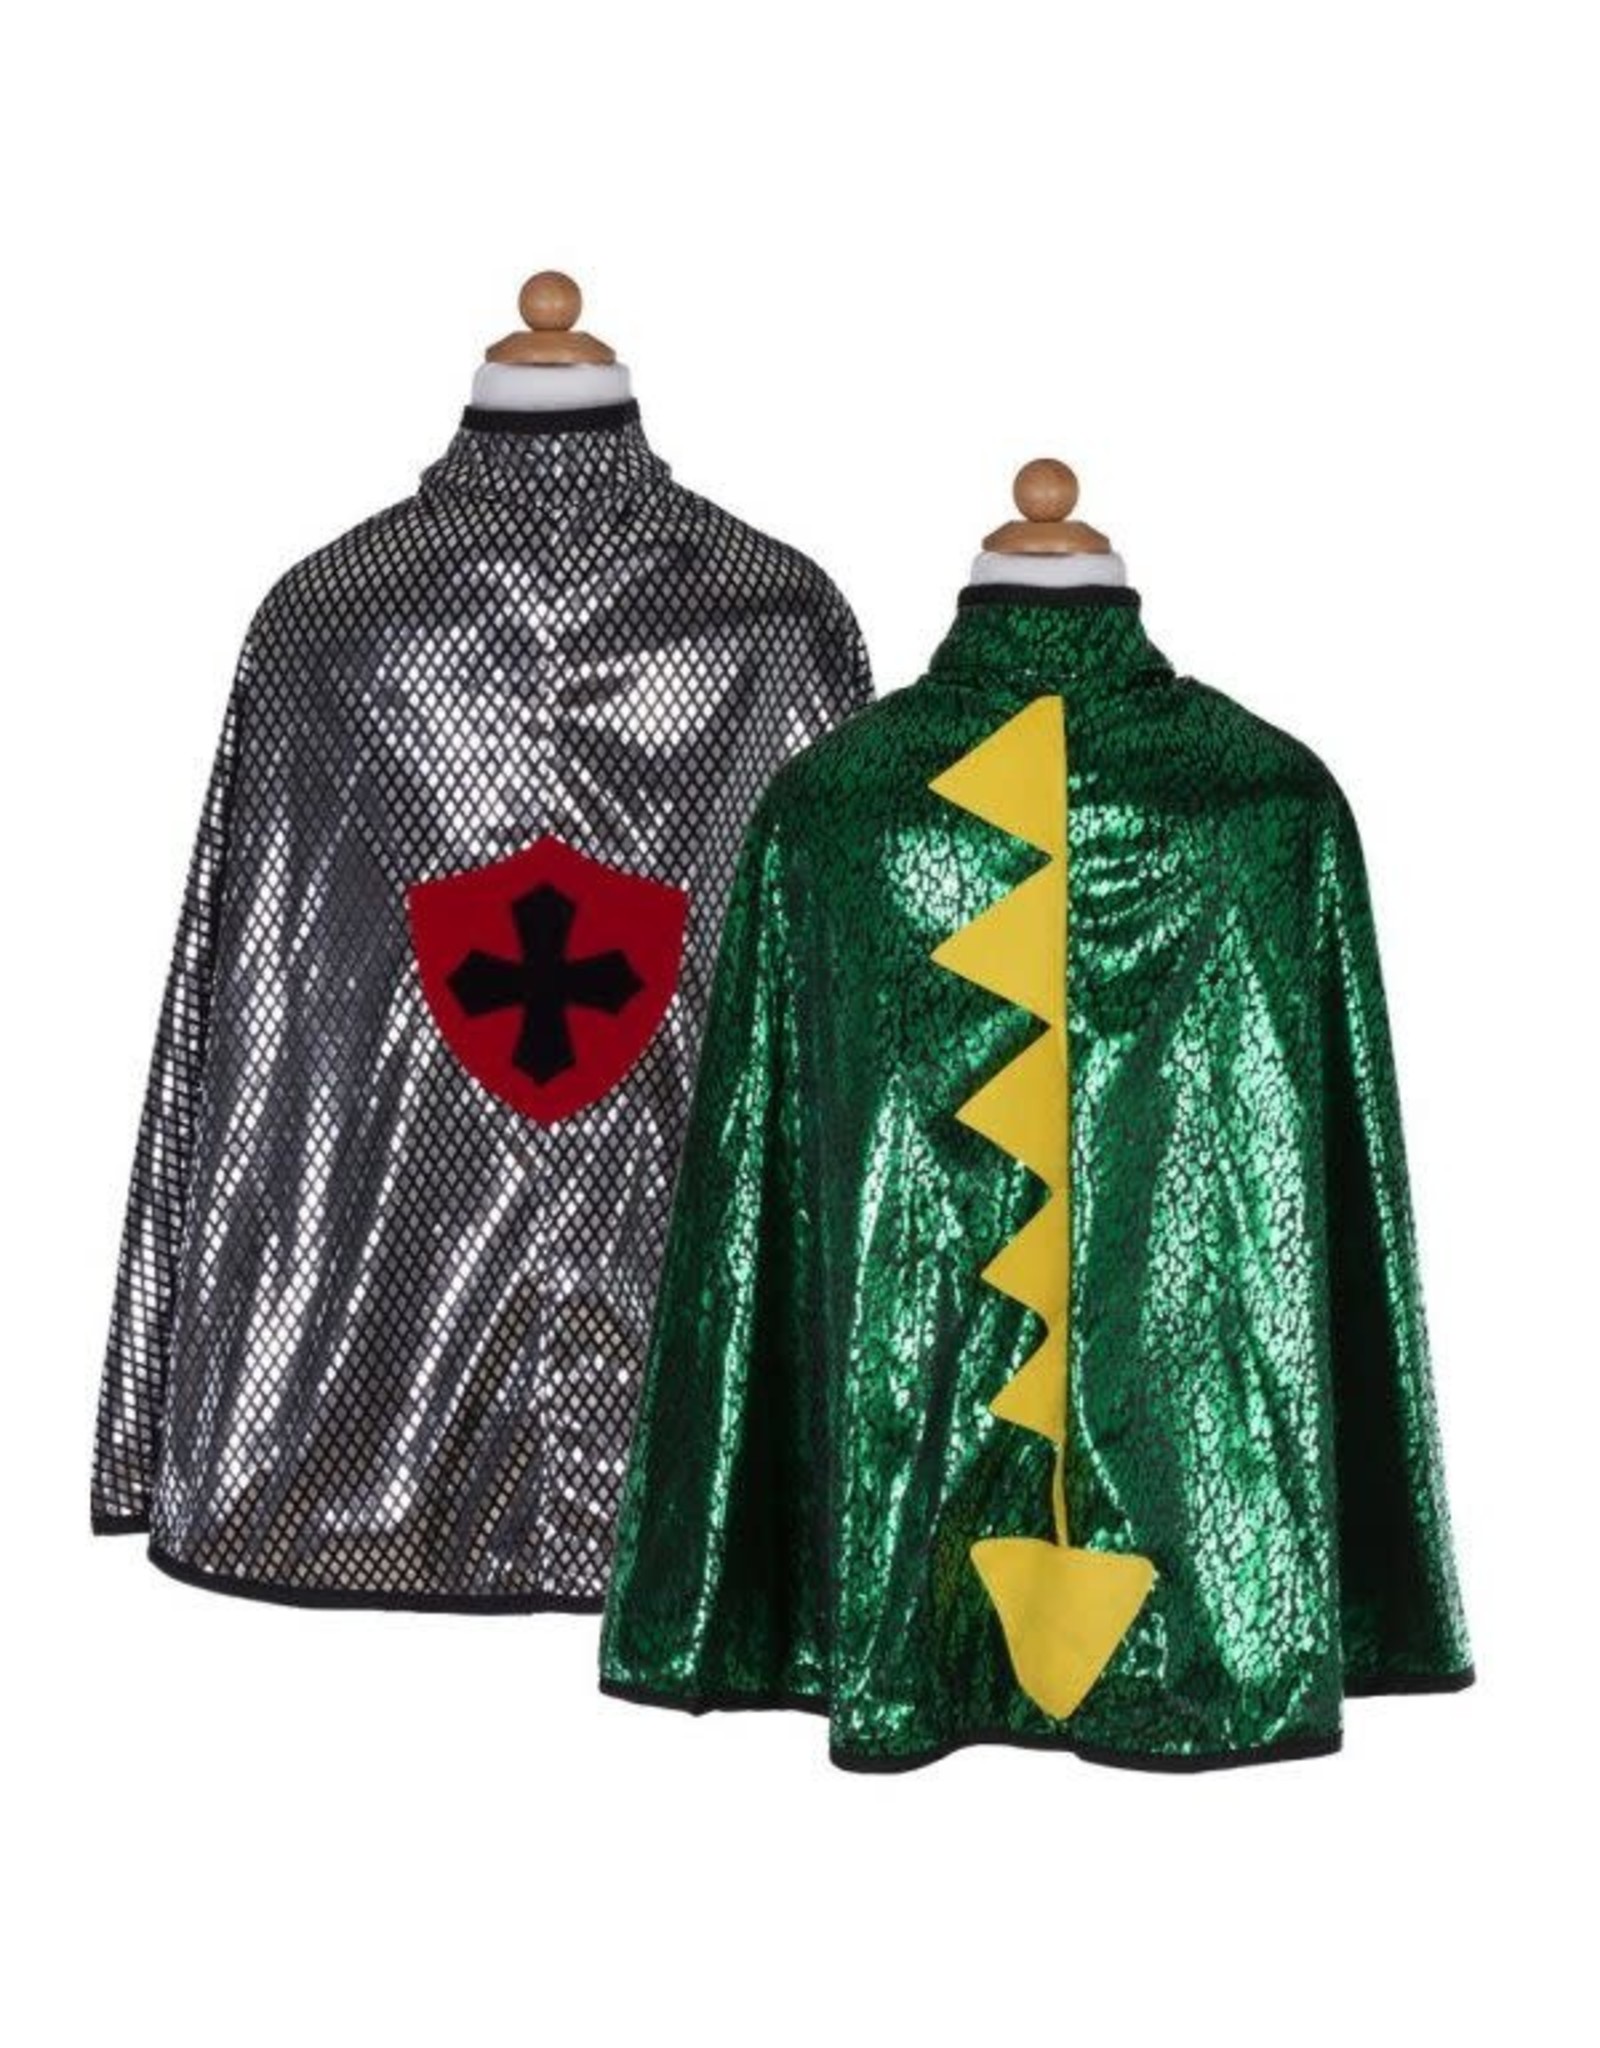 Great Pretenders Reversible Dragon Knight Cape Costume, Size 5/6